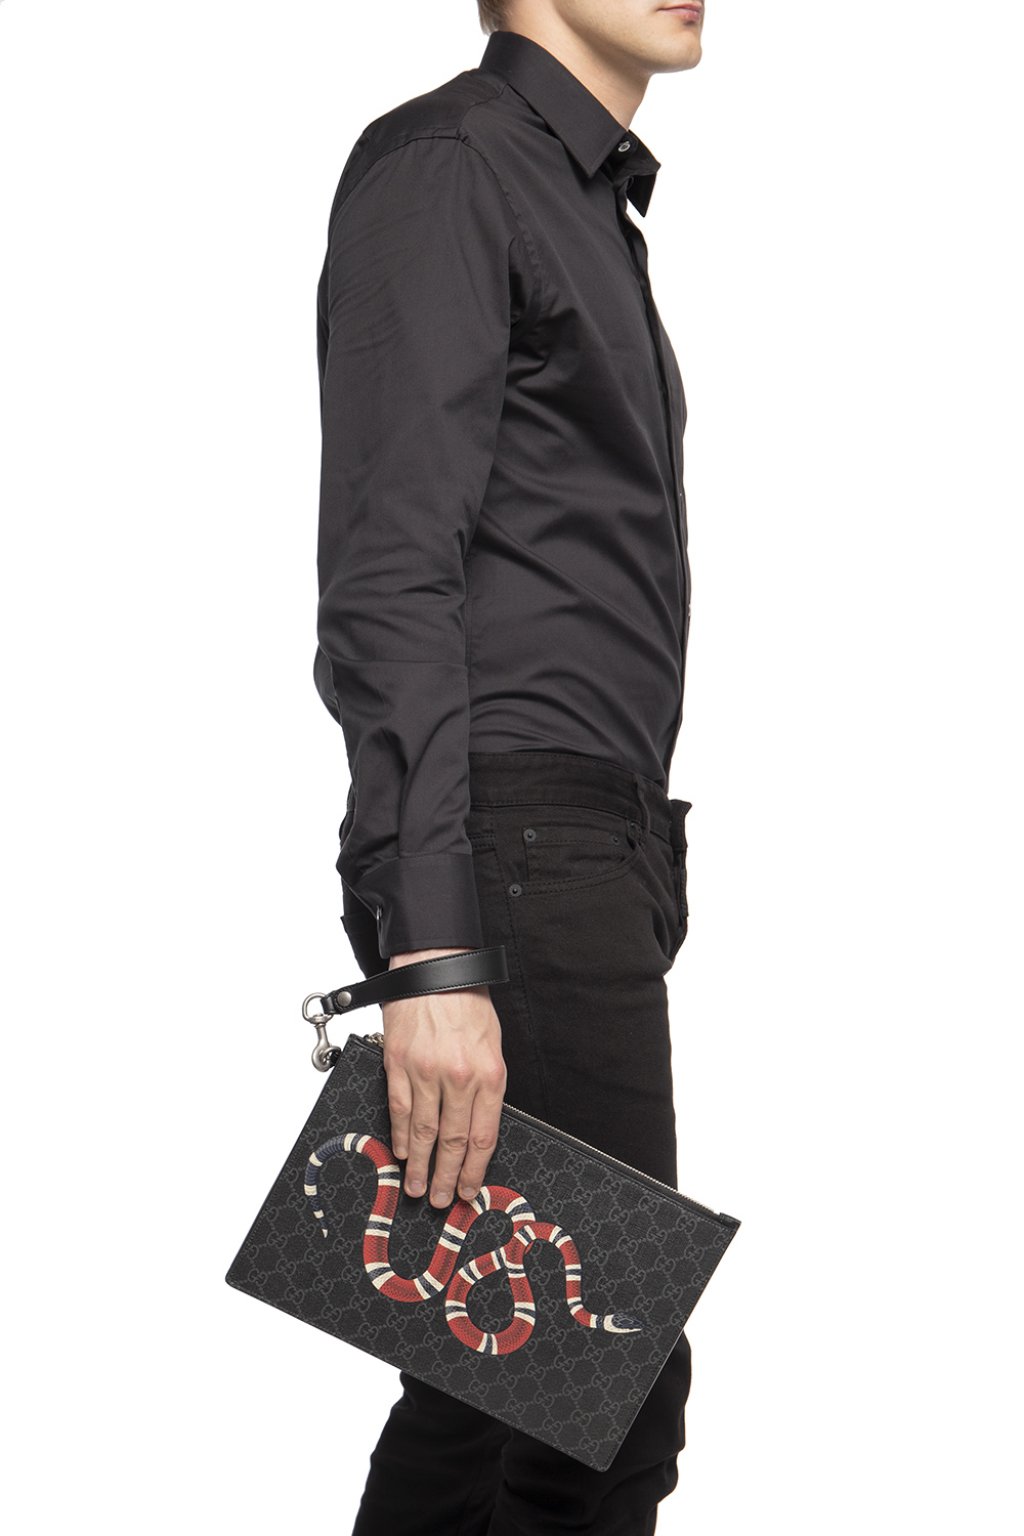 Gucci Strap Up All Your Essentials in item gucci's Supreme Camera Bag